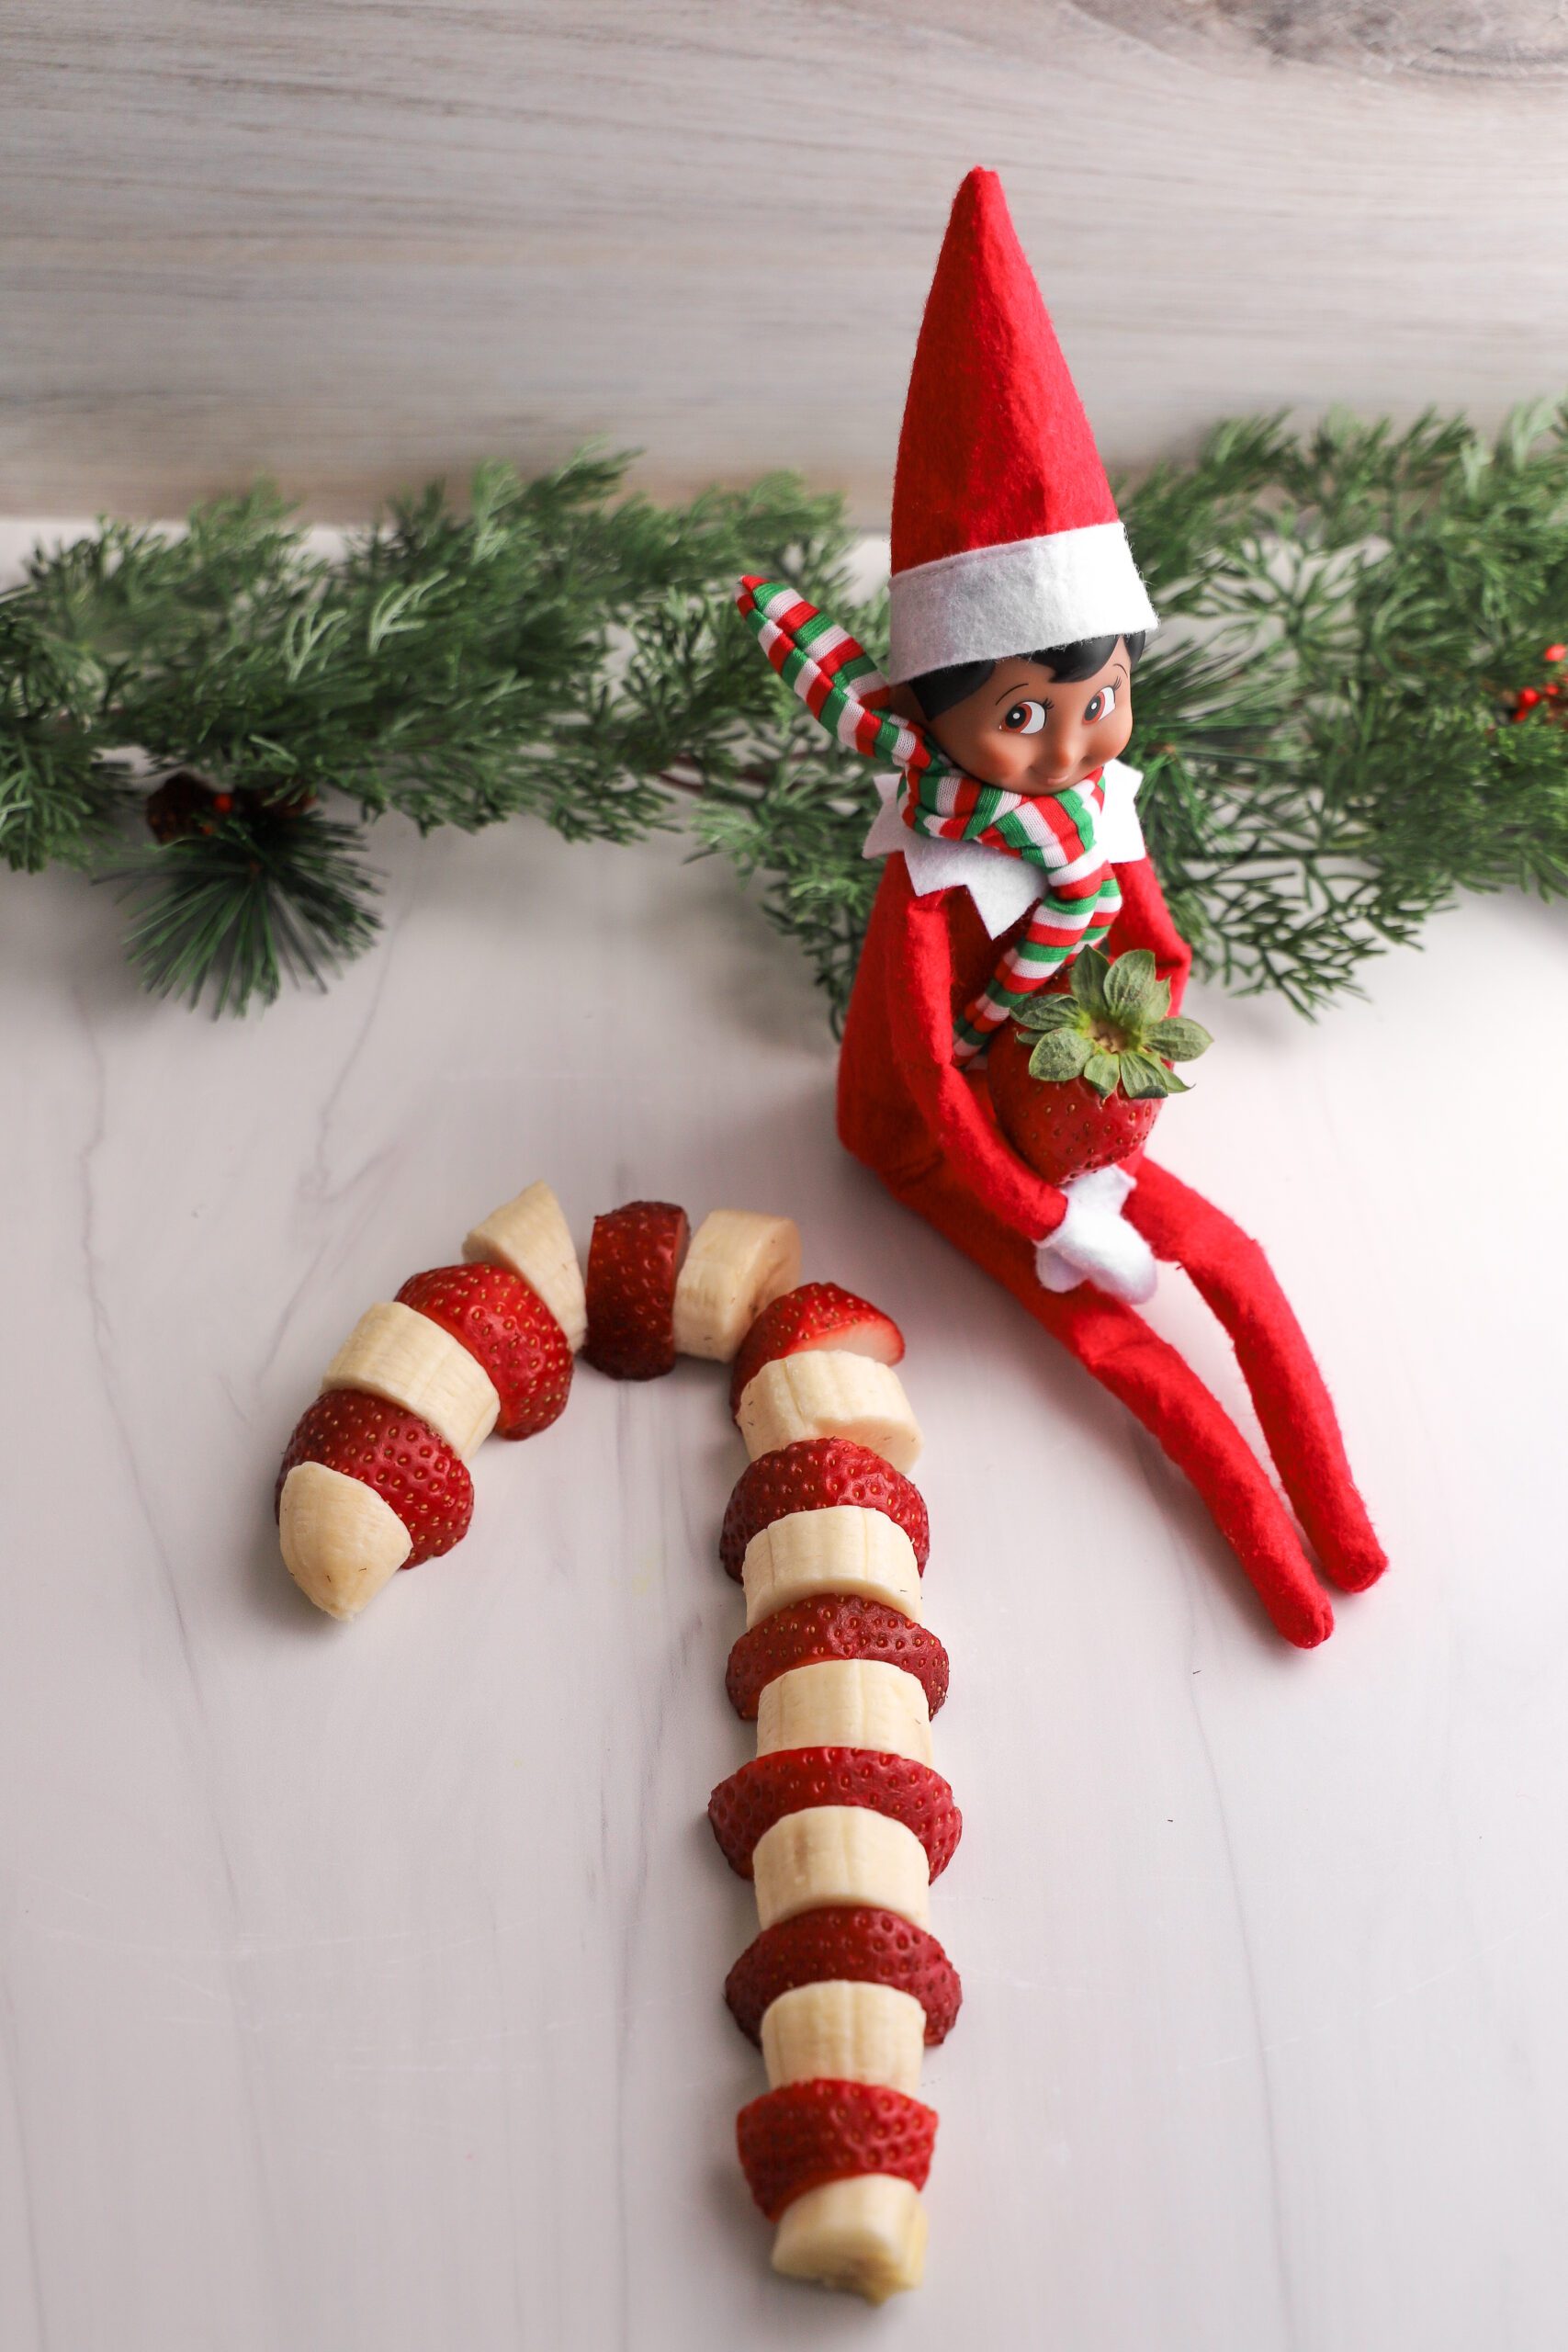 Elf makes a candycane snack